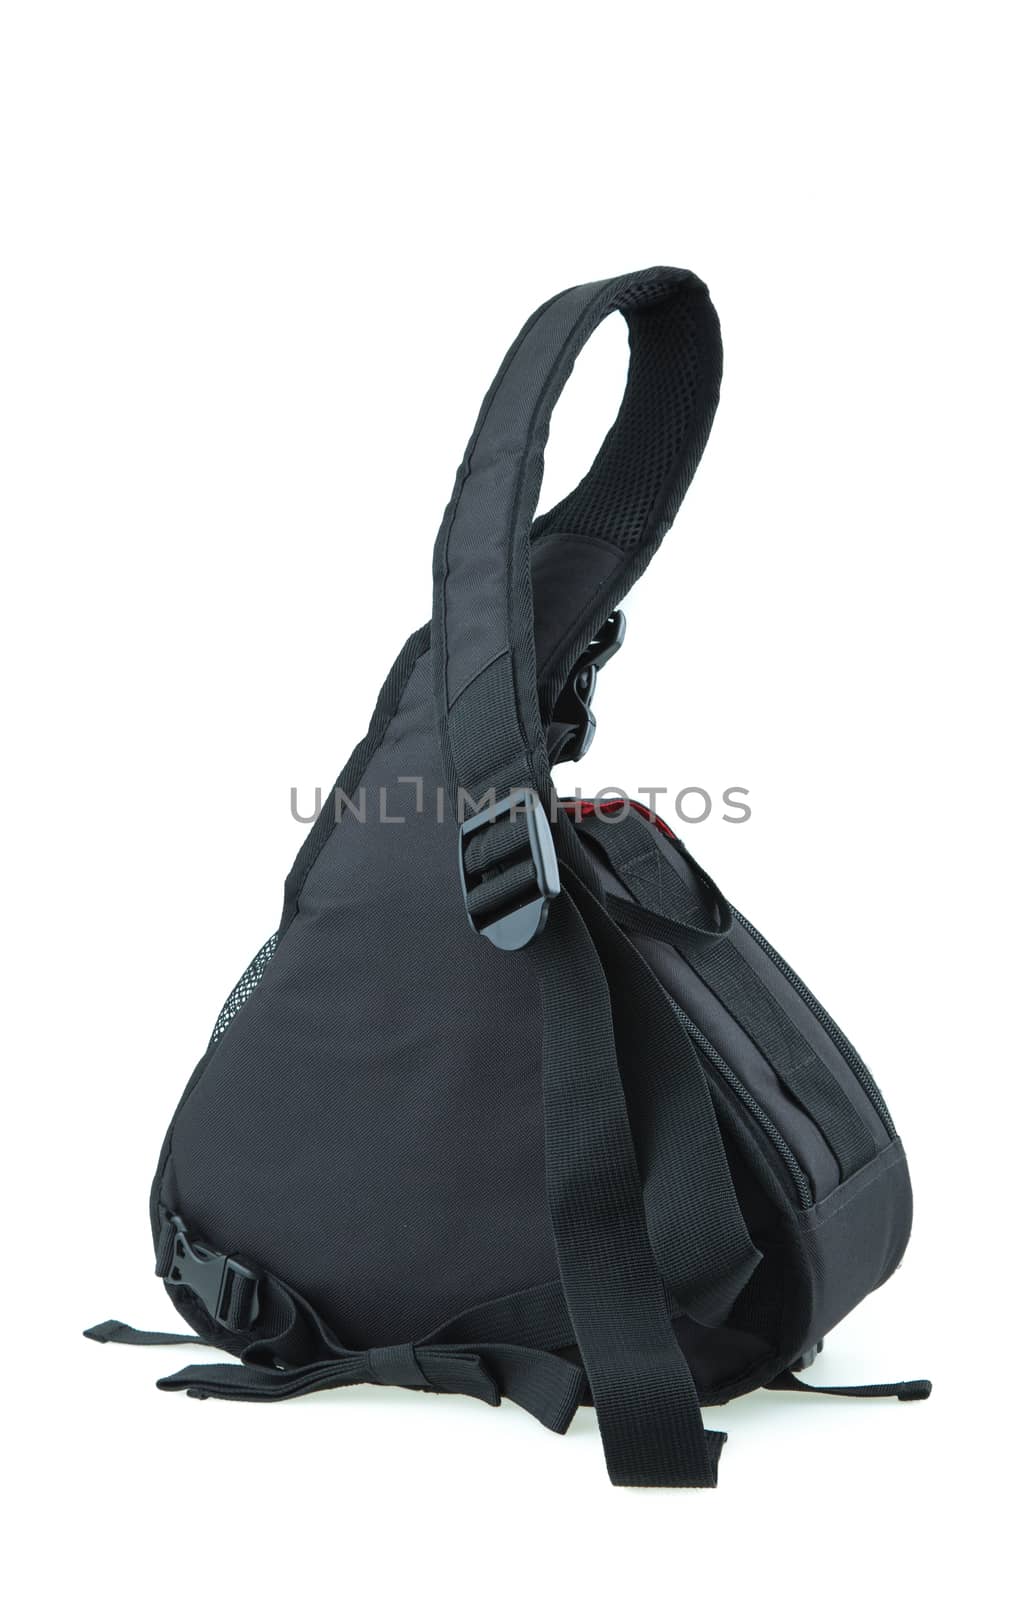 Black sling bag isolated on white background